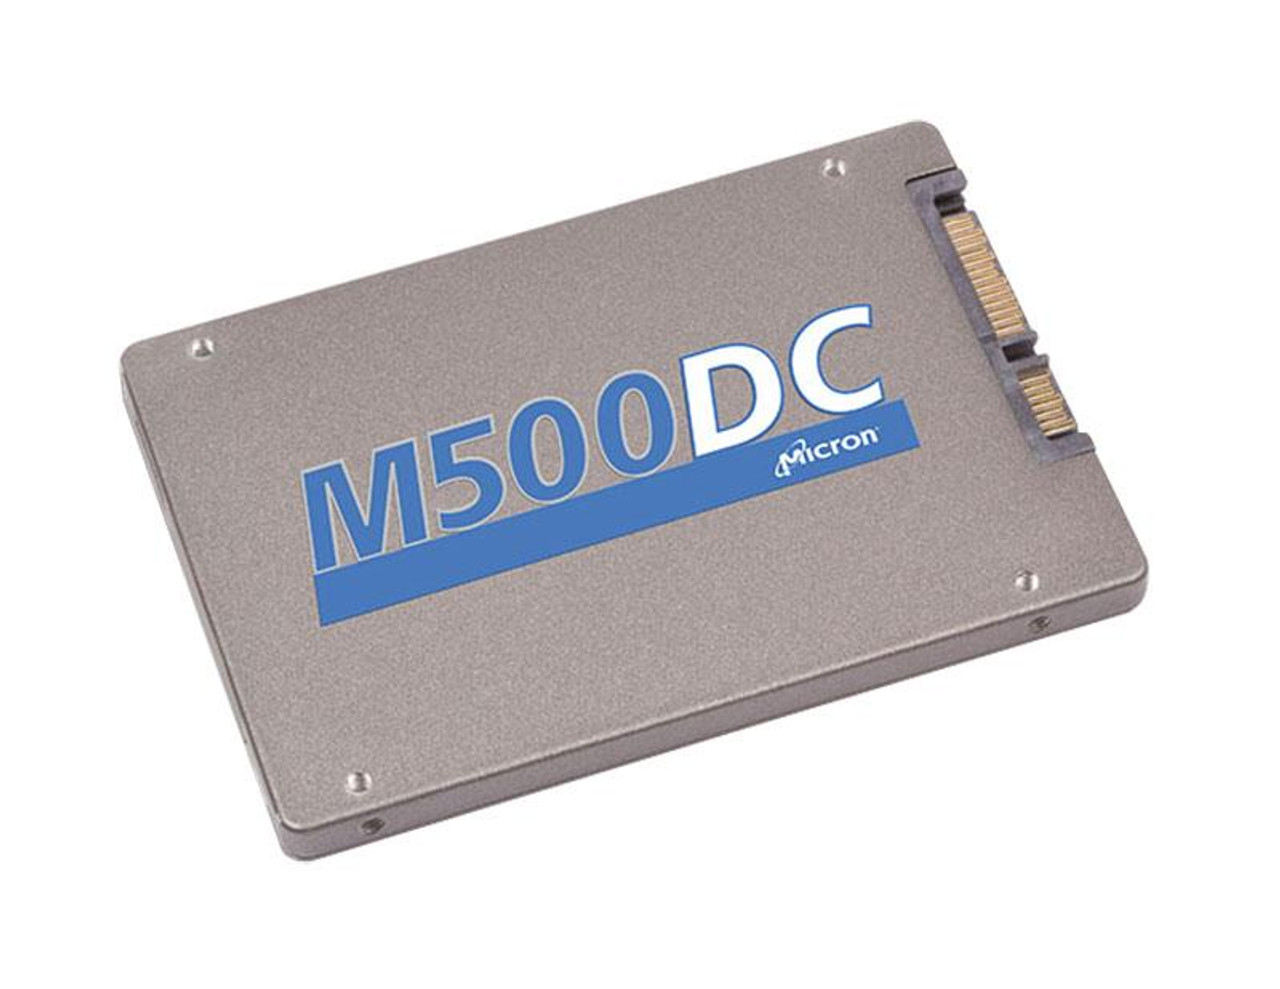 MTFDDAK480MBB1AE1ZAB Micron M500DC 480GB MLC SATA 6Gbps 2.5-inch Internal Solid State Drive (SSD)